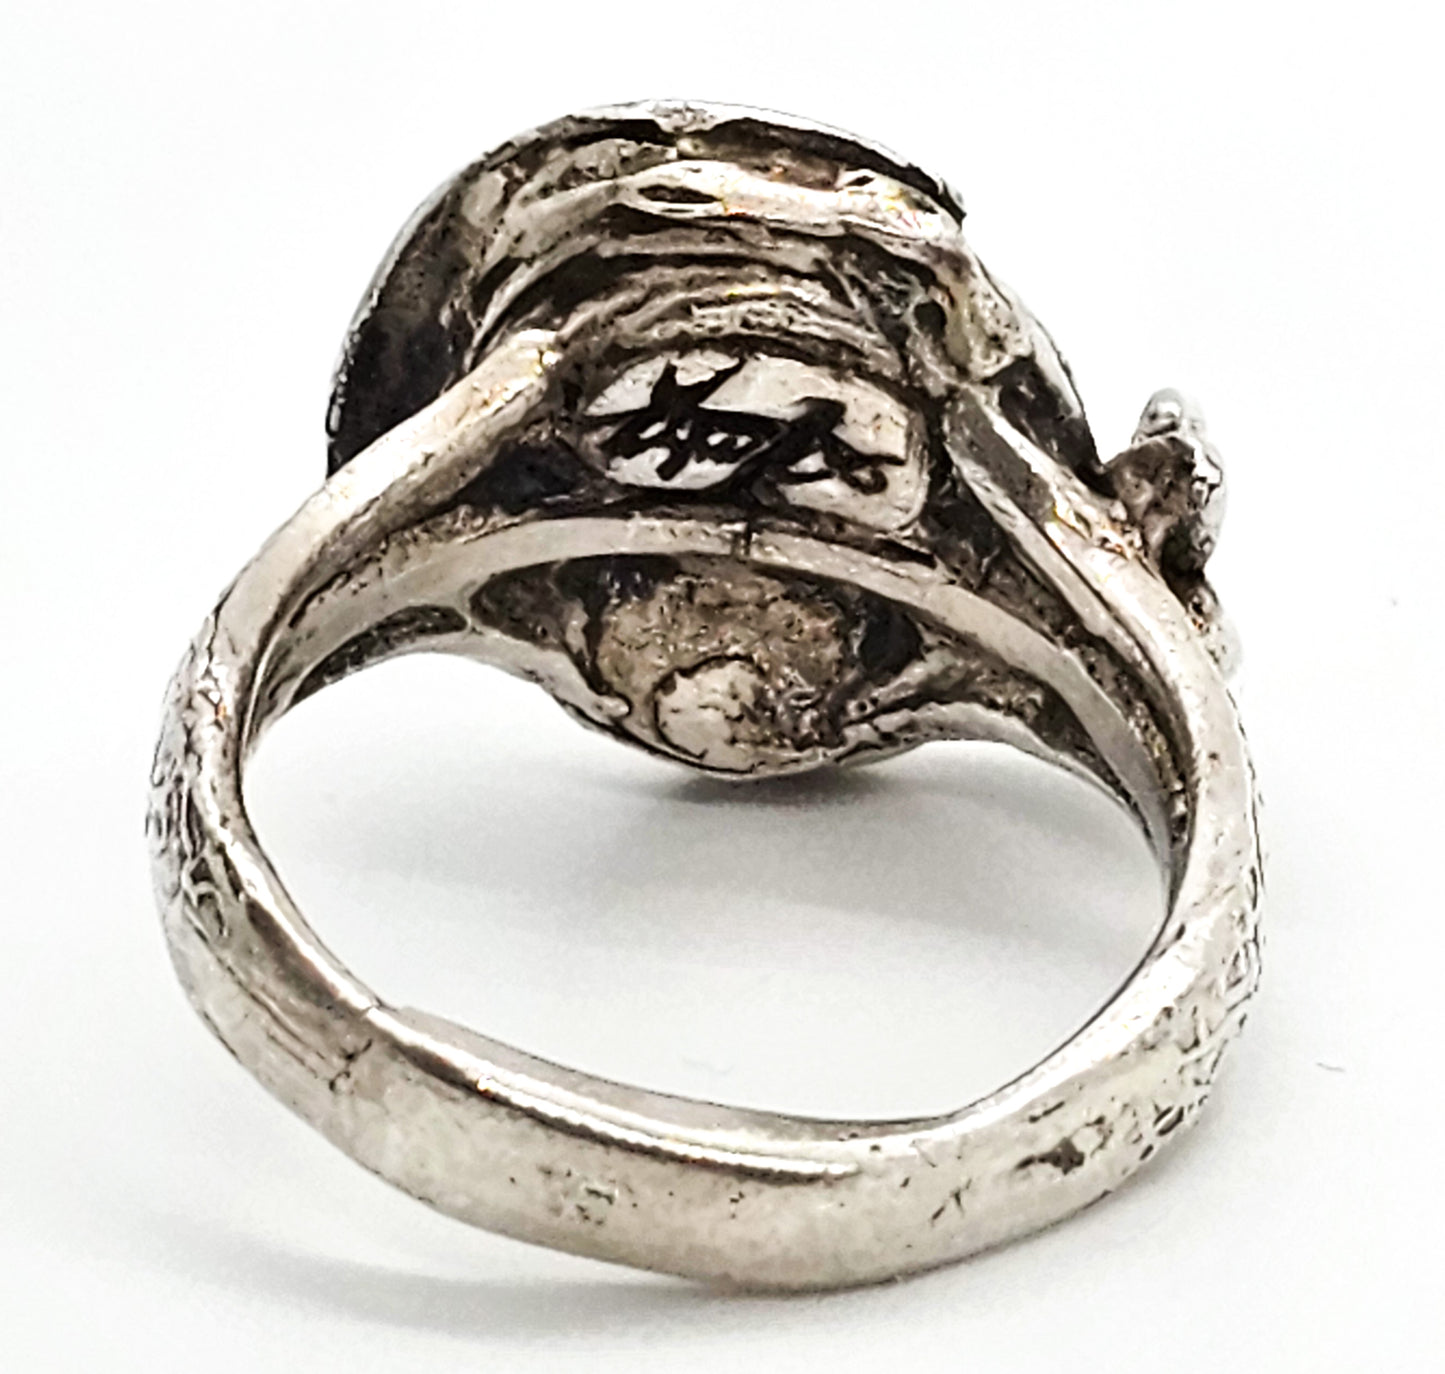 Black opal doublet casted artisan signed flower embossed sterling silver ring size 11